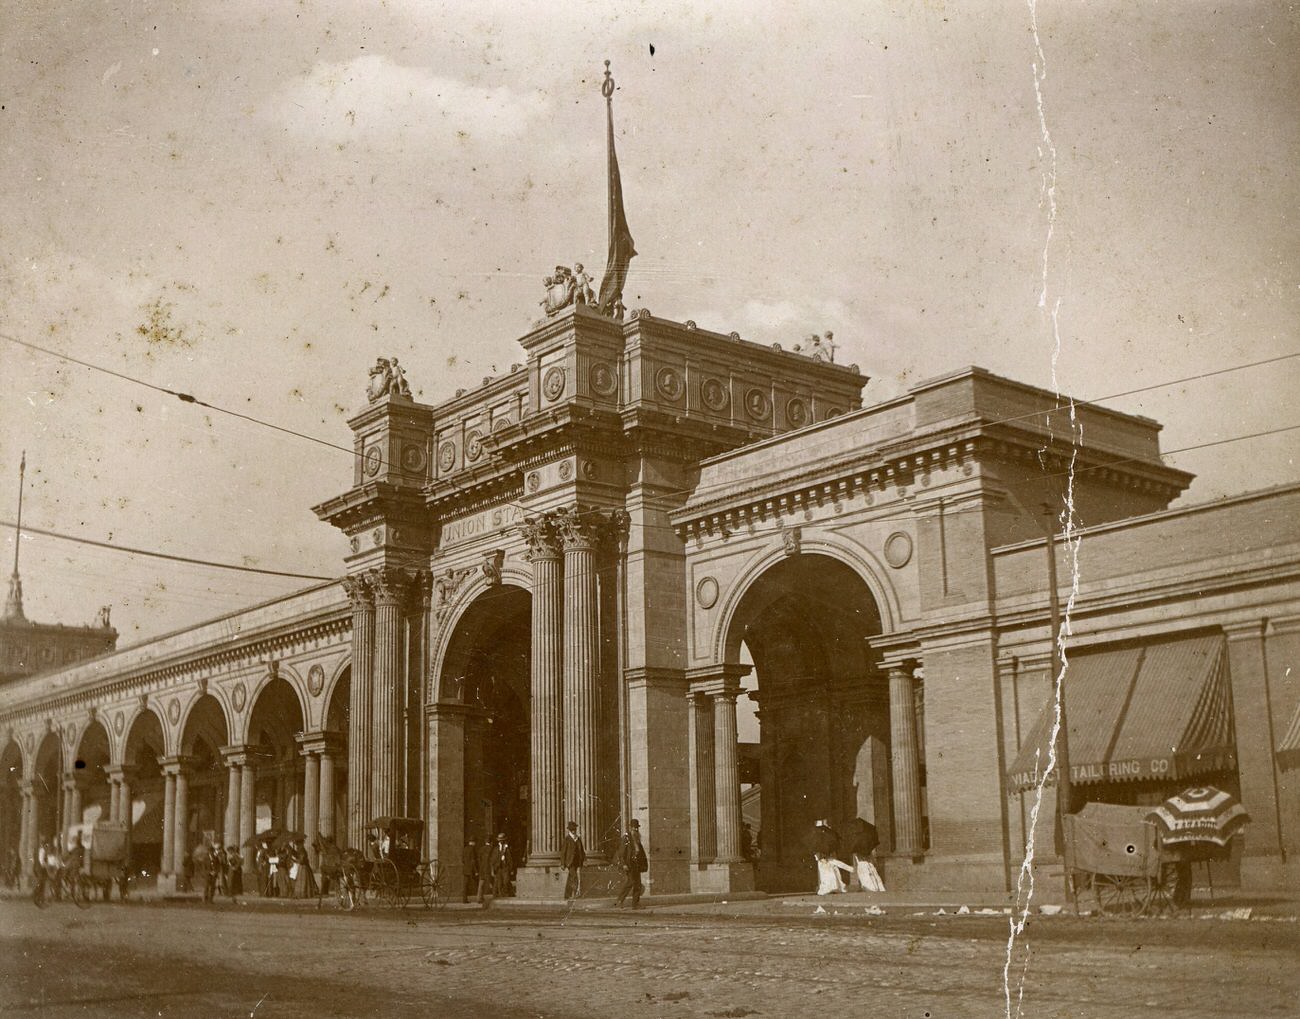 North High Street facade of the third Columbus Union Station, designed by Daniel Hudson Burnham, circa 1900.